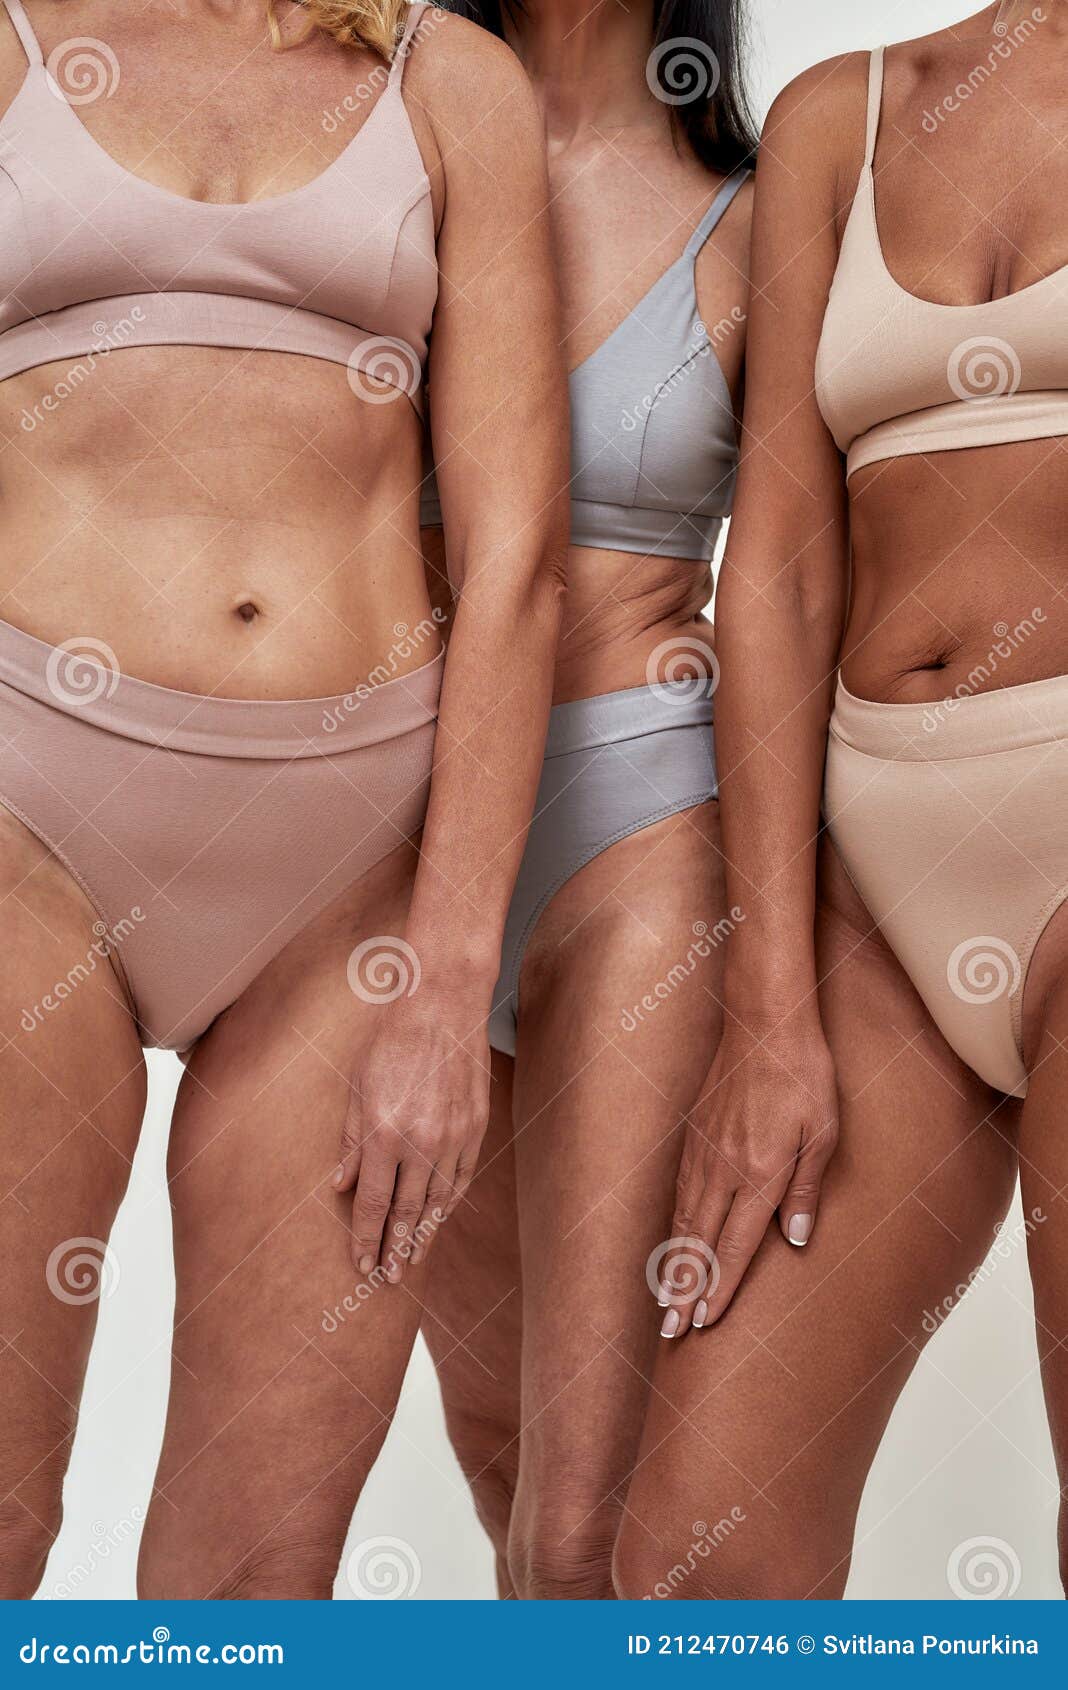 https://thumbs.dreamstime.com/z/love-your-body-cropped-shot-three-caucasian-mature-women-underwear-posing-half-naked-studio-against-light-love-your-body-212470746.jpg